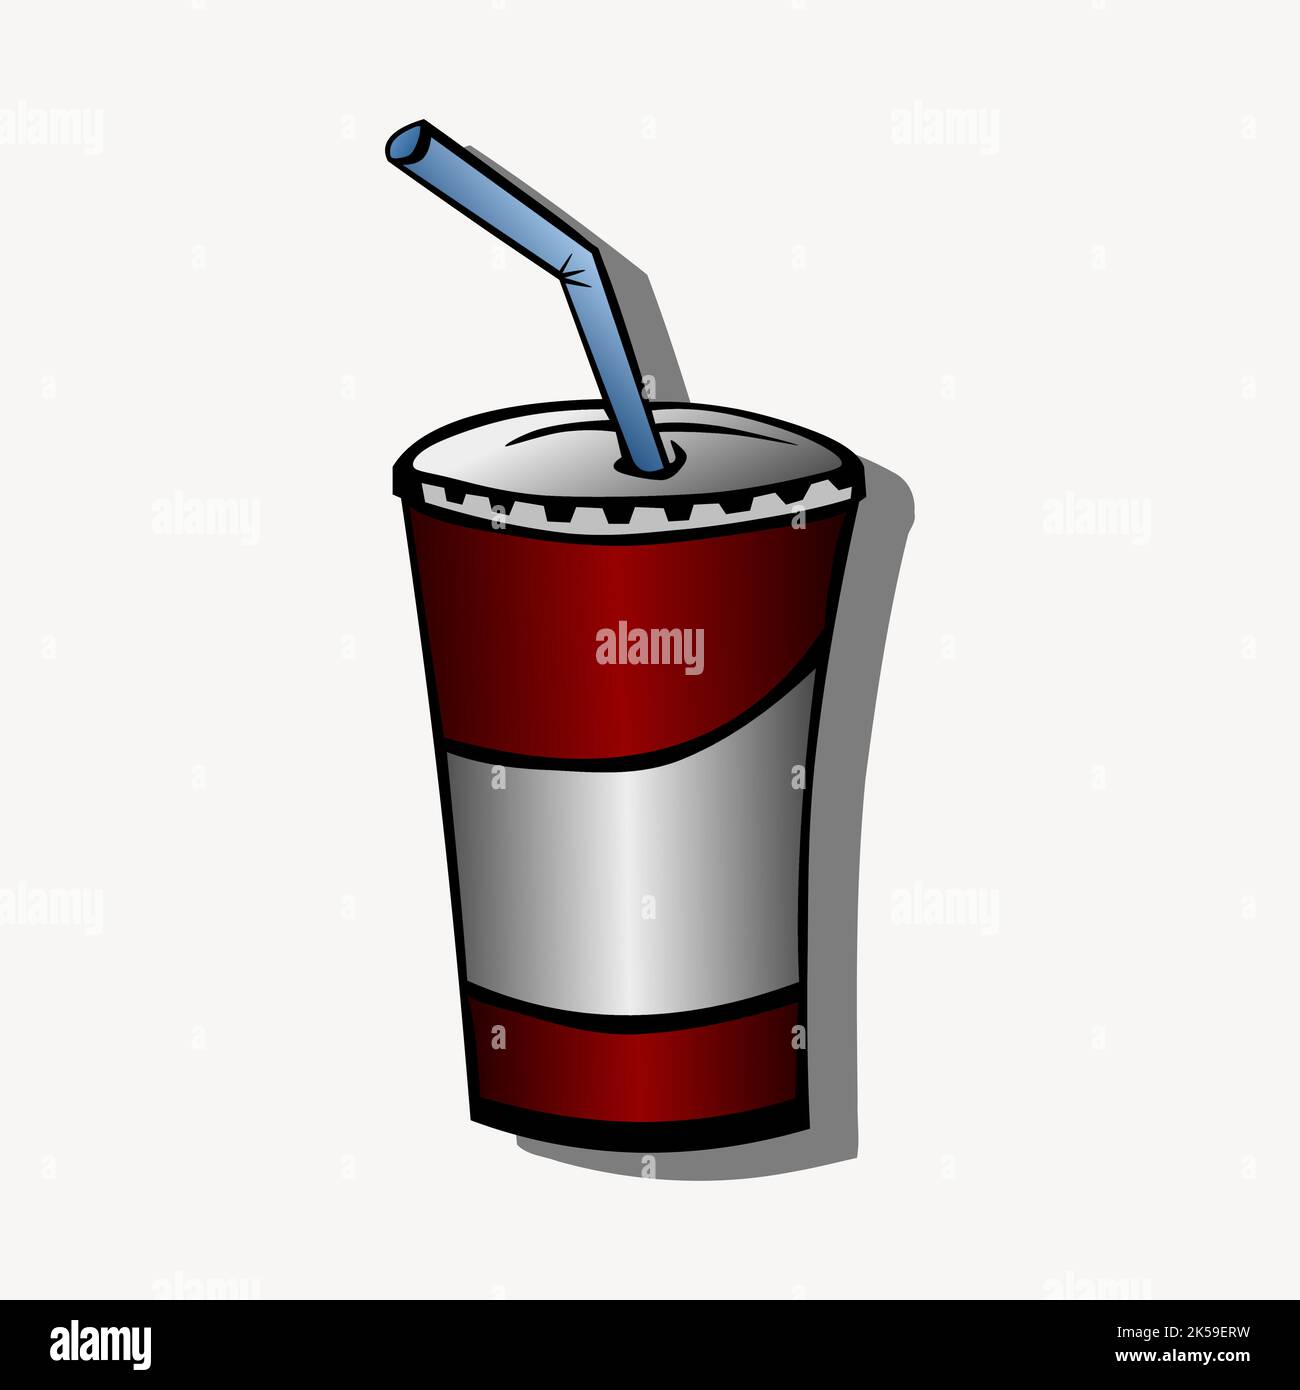 https://c8.alamy.com/comp/2K59ERW/soda-cup-clipart-object-illustration-vector-2K59ERW.jpg